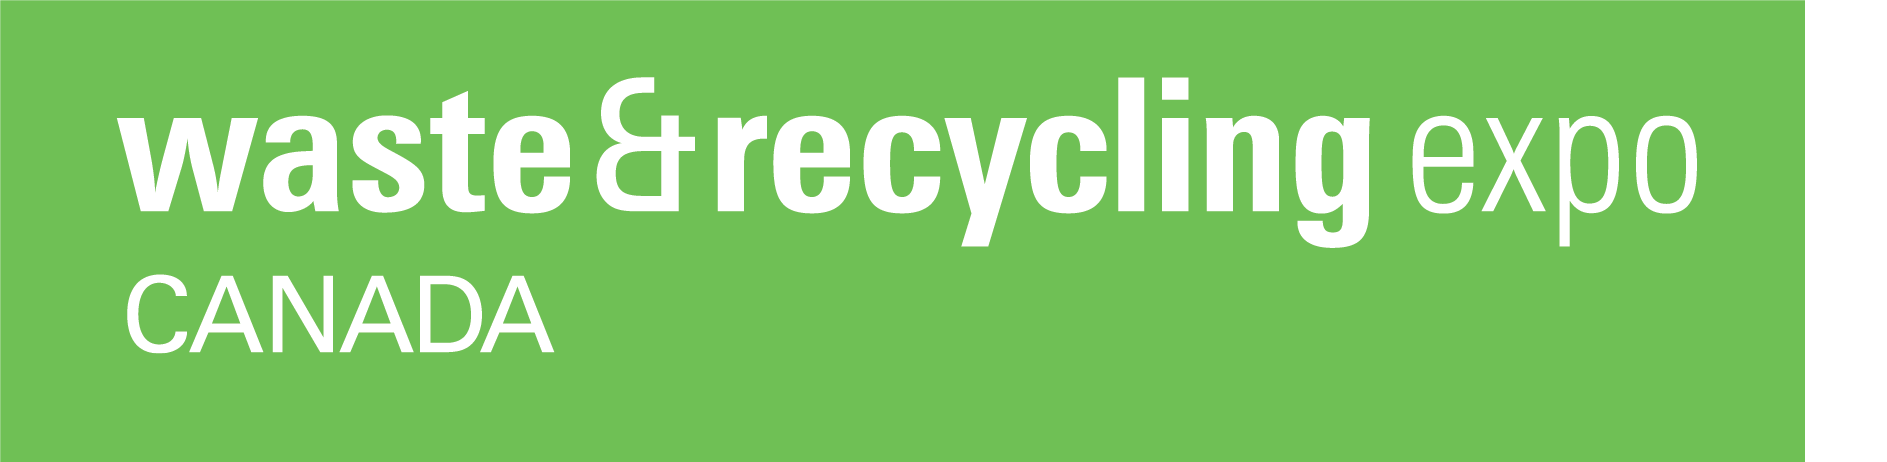 WasteRecyclingLogo_Green